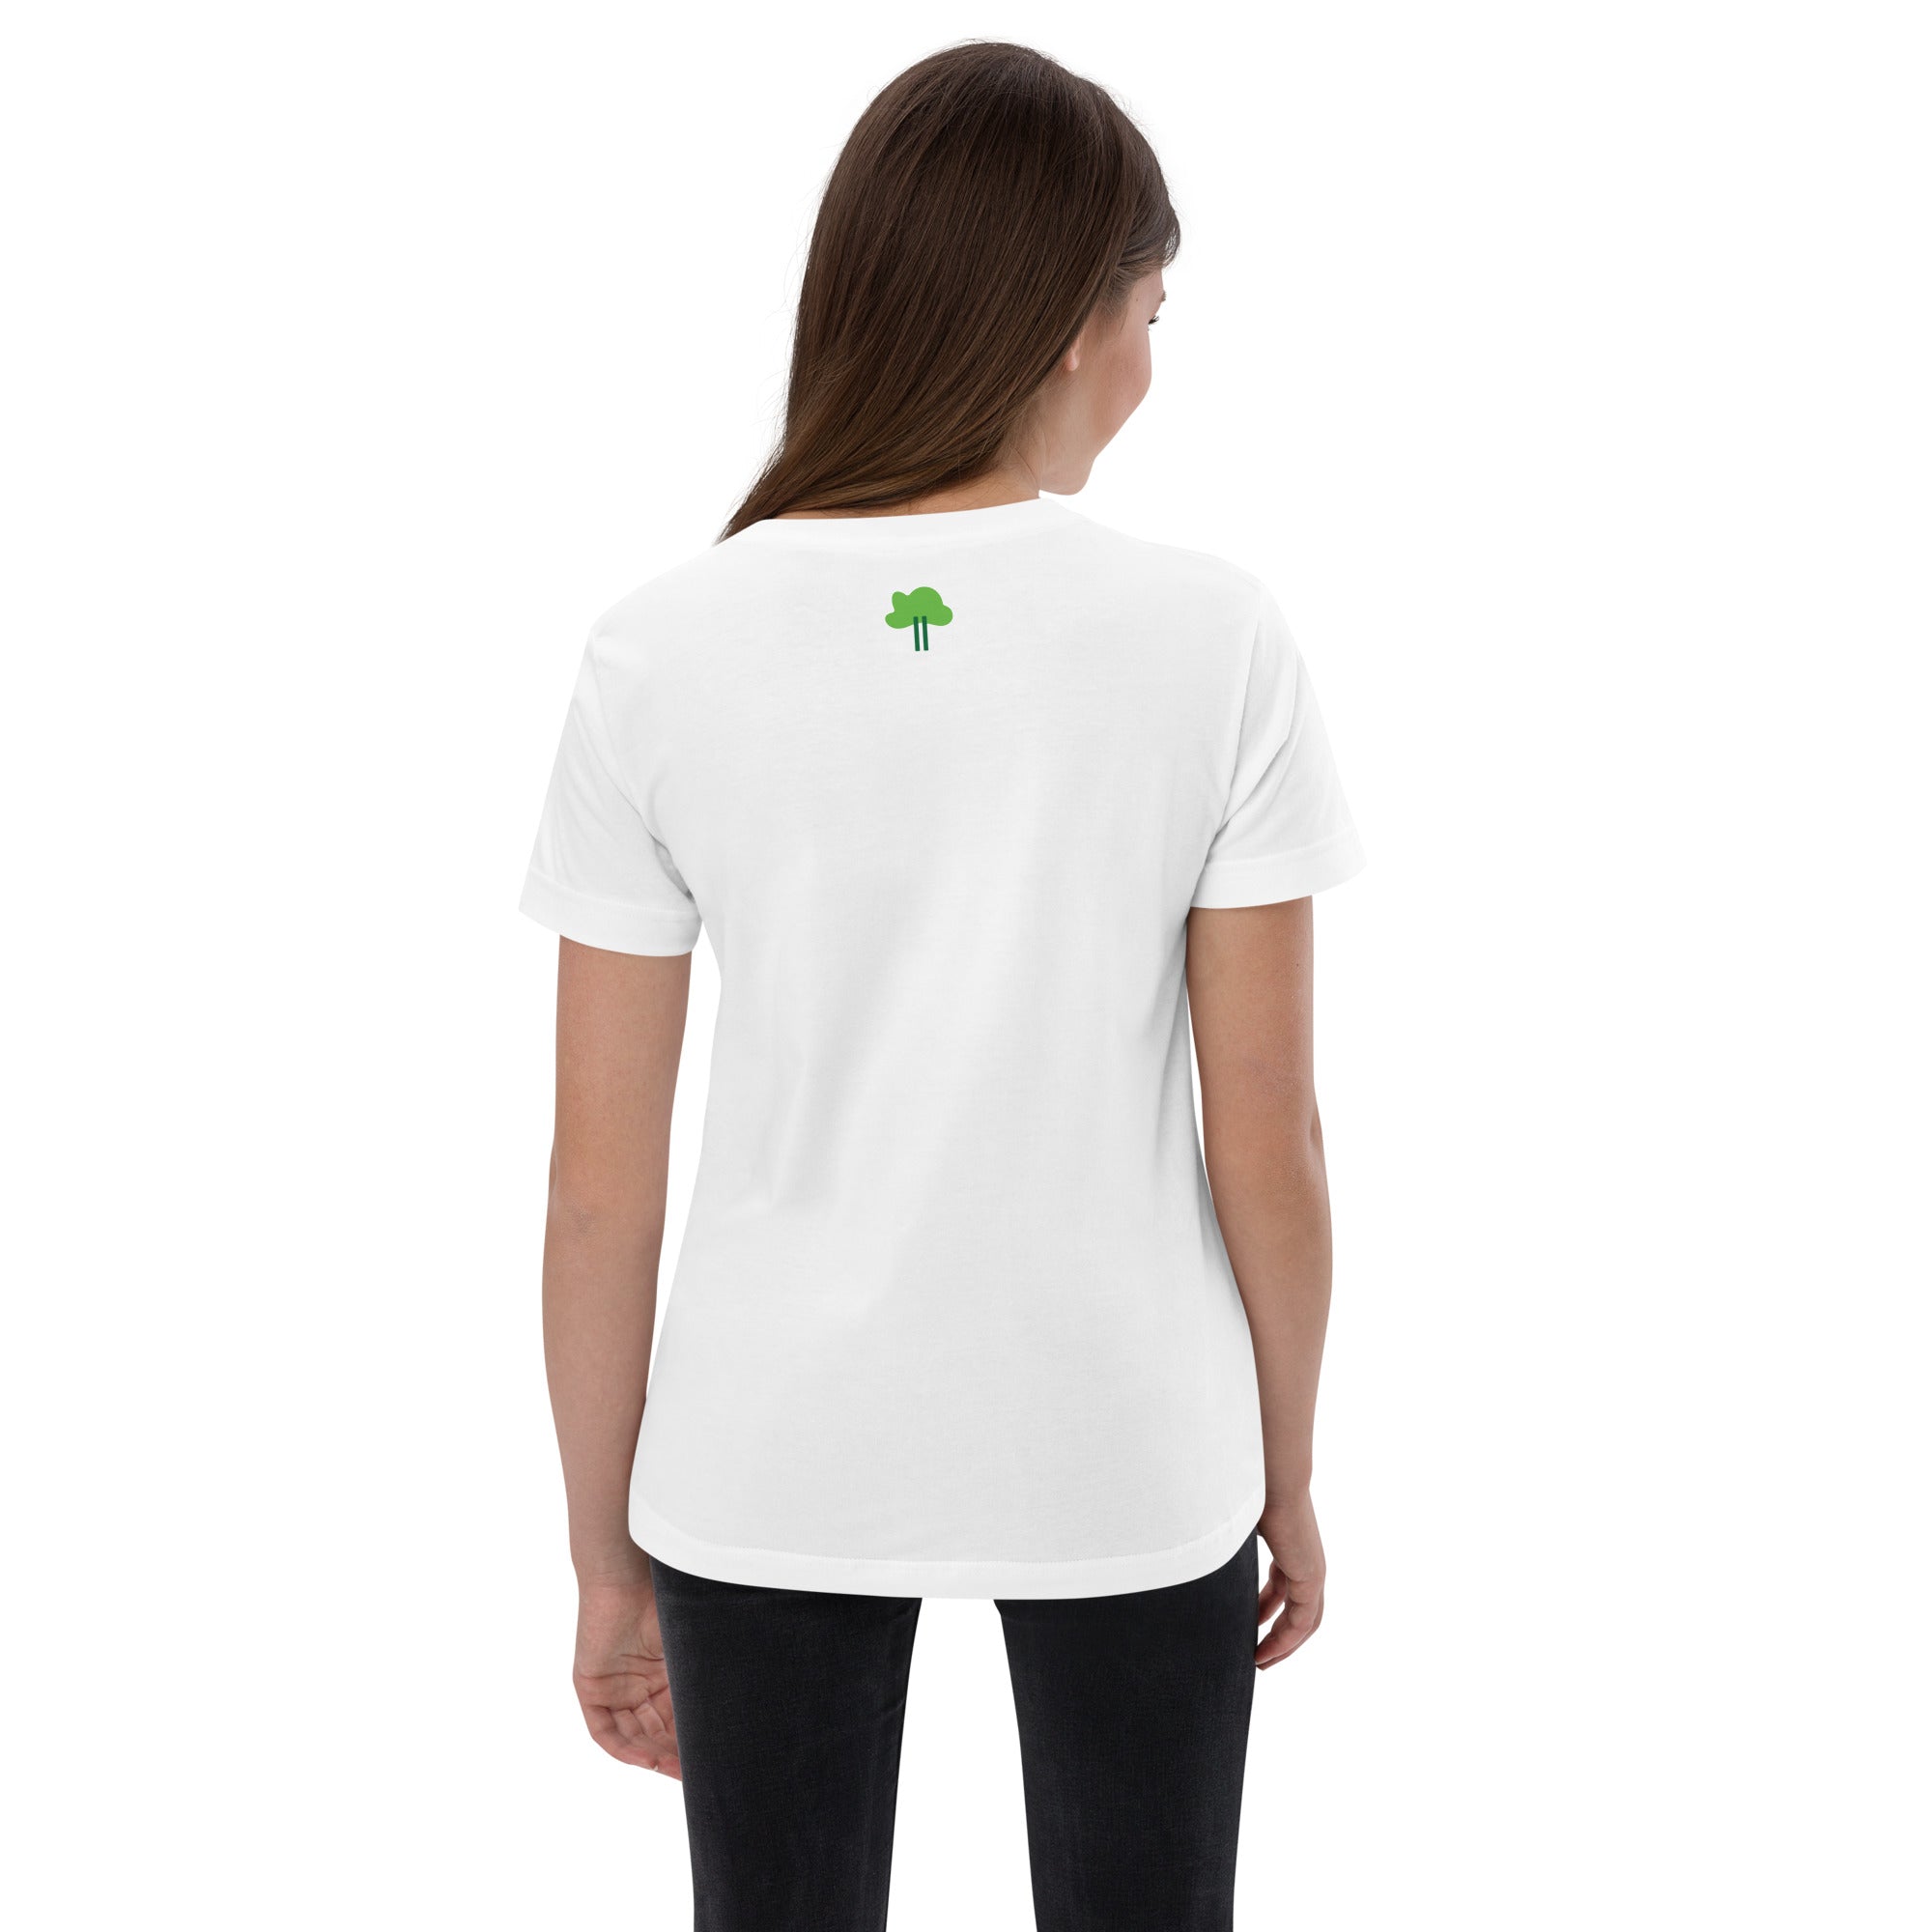 I Temp - Sabana - FK | Youth jersey t-shirt